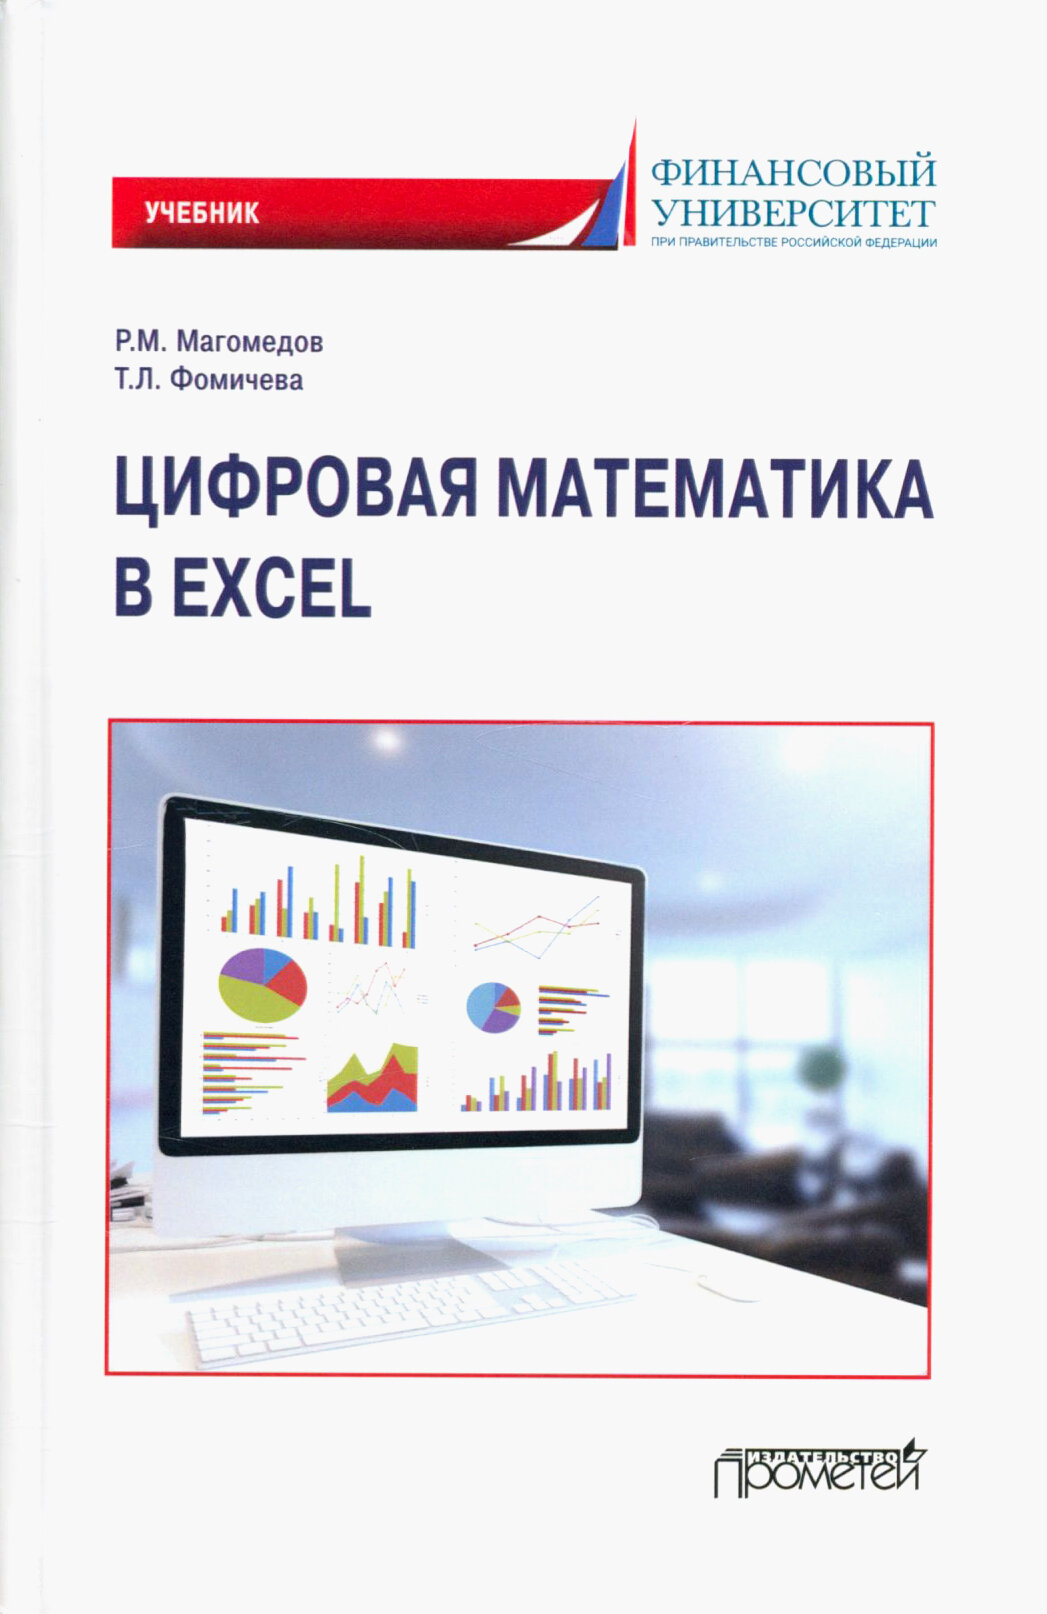 Цифровая математика в Excel. Учебник - фото №3